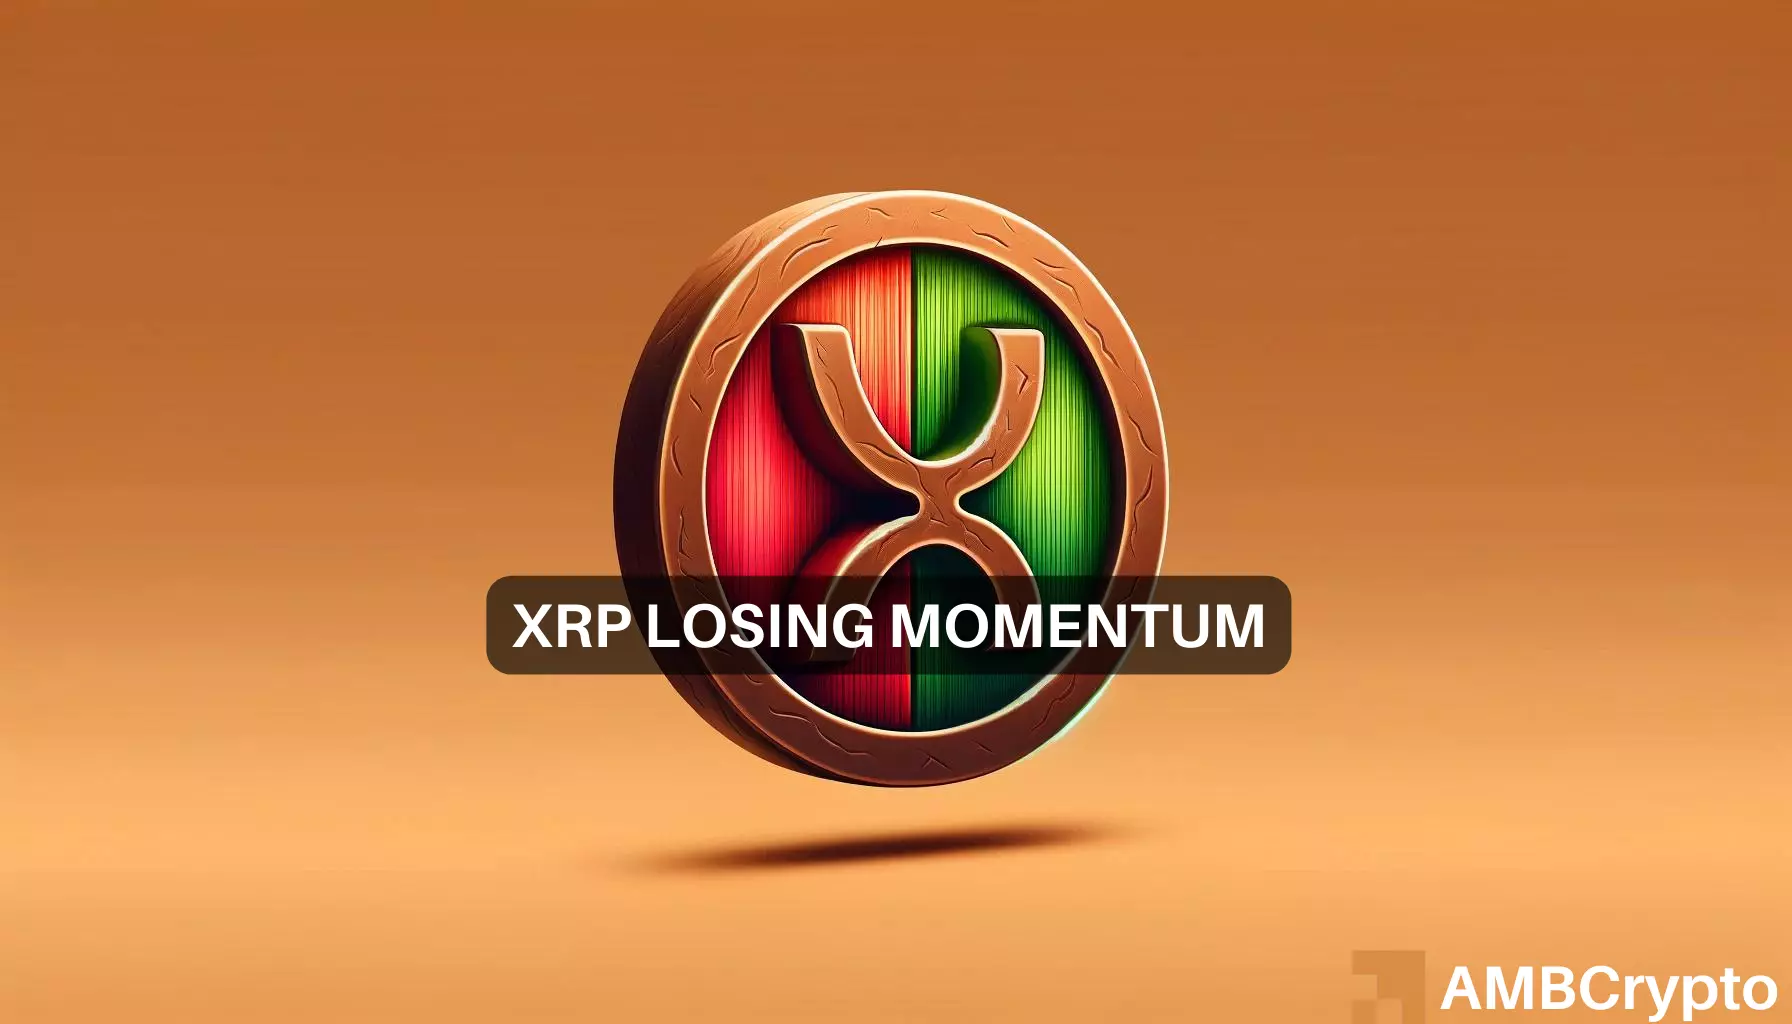 XRP price prediction